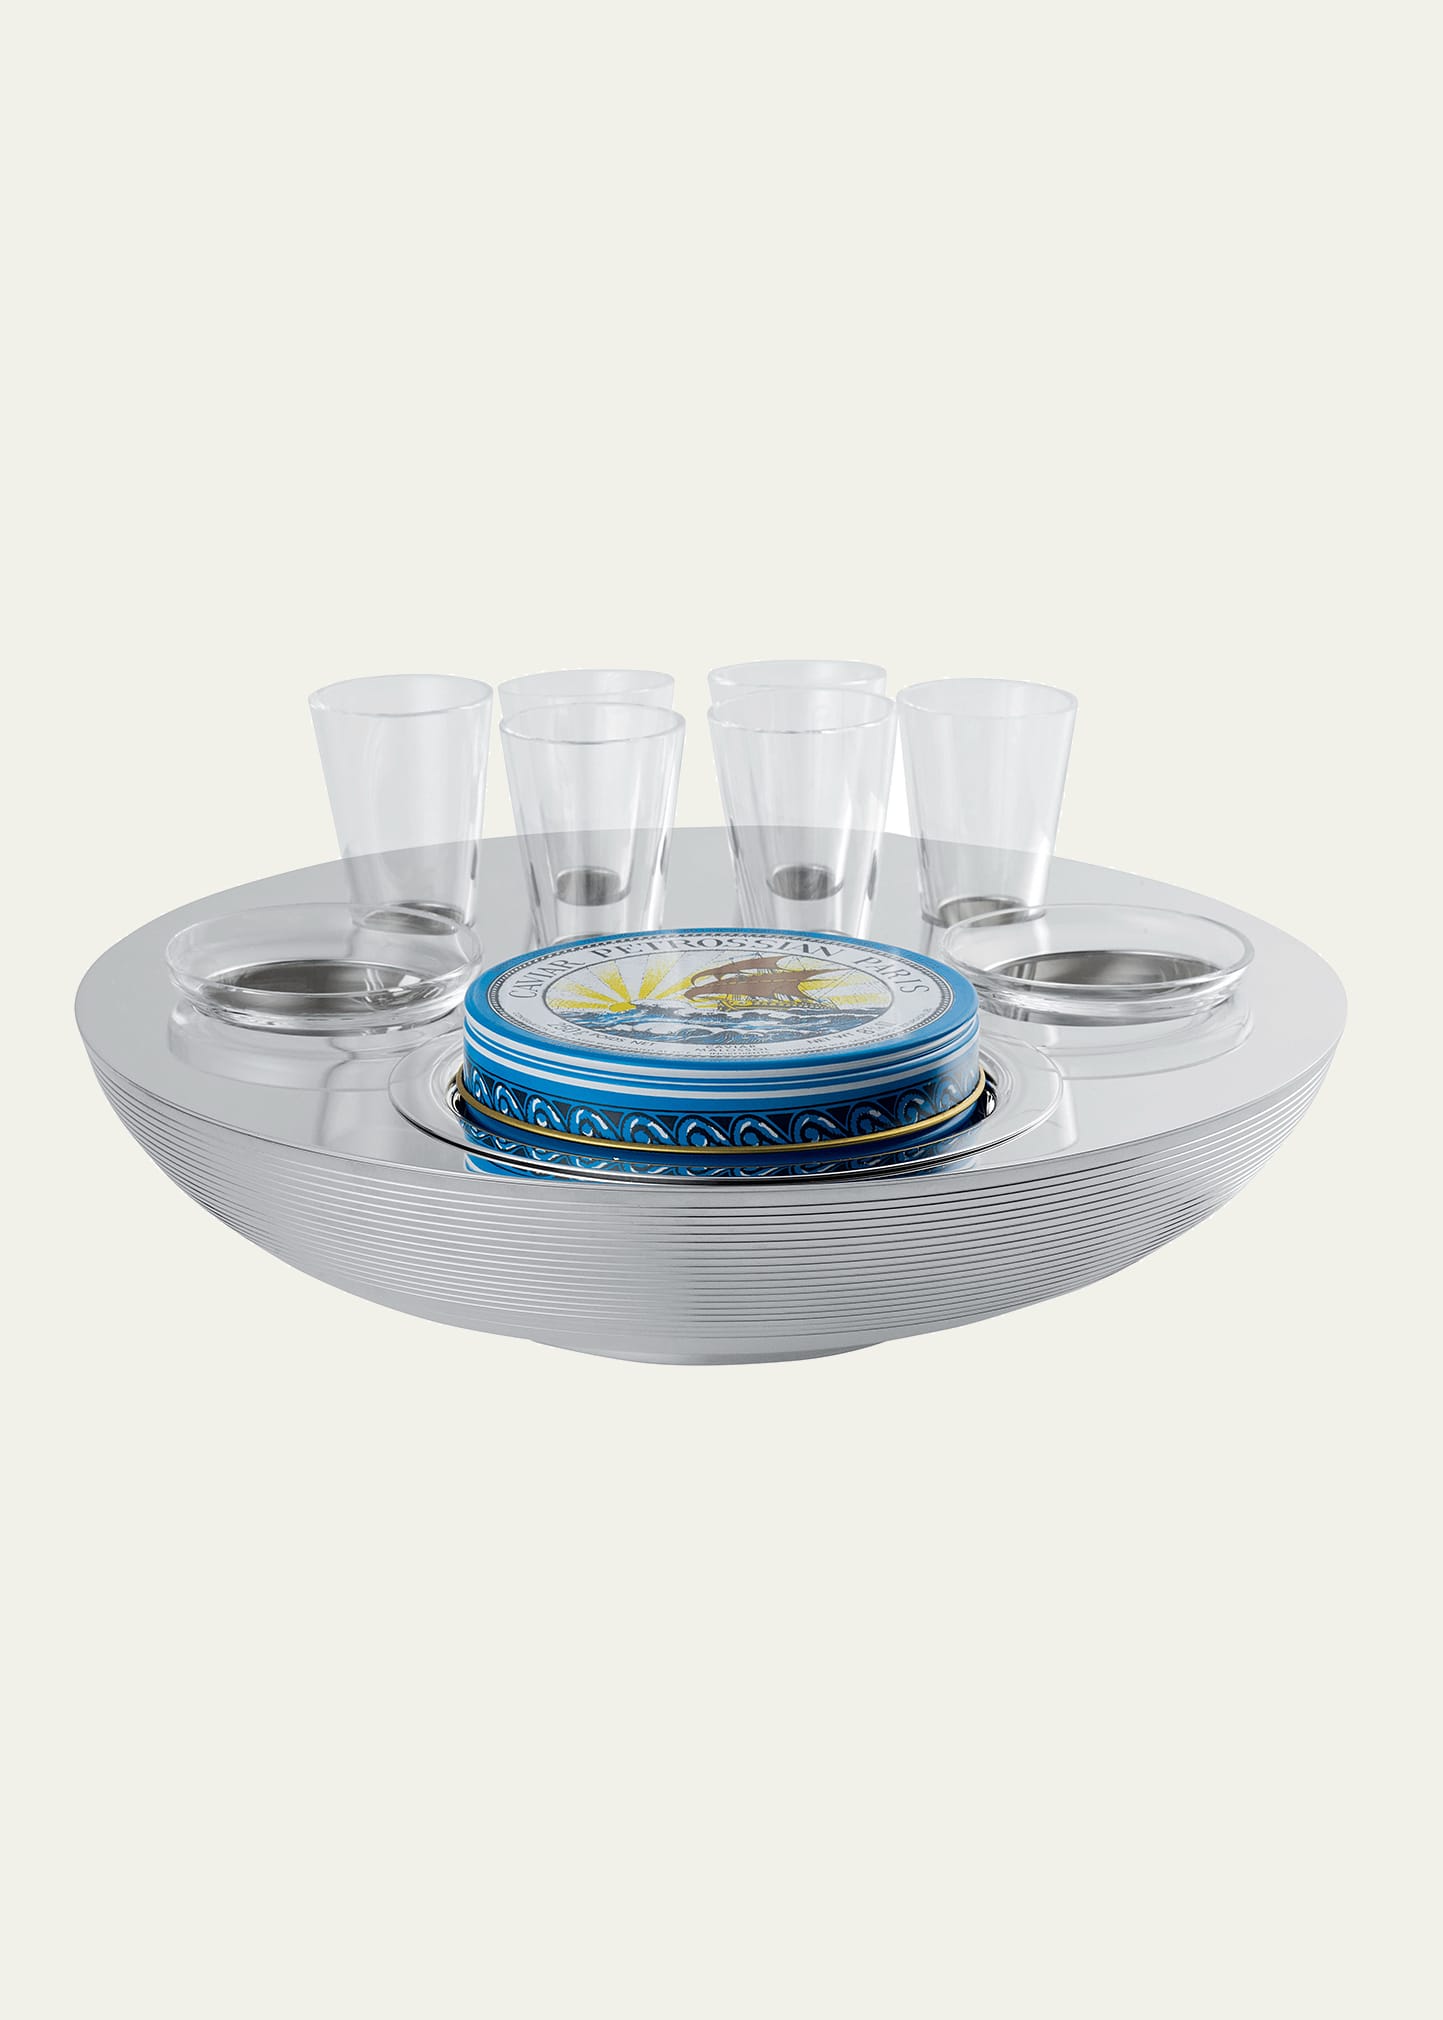 Ercuis Transat Caviar Vodka Set In Transparent